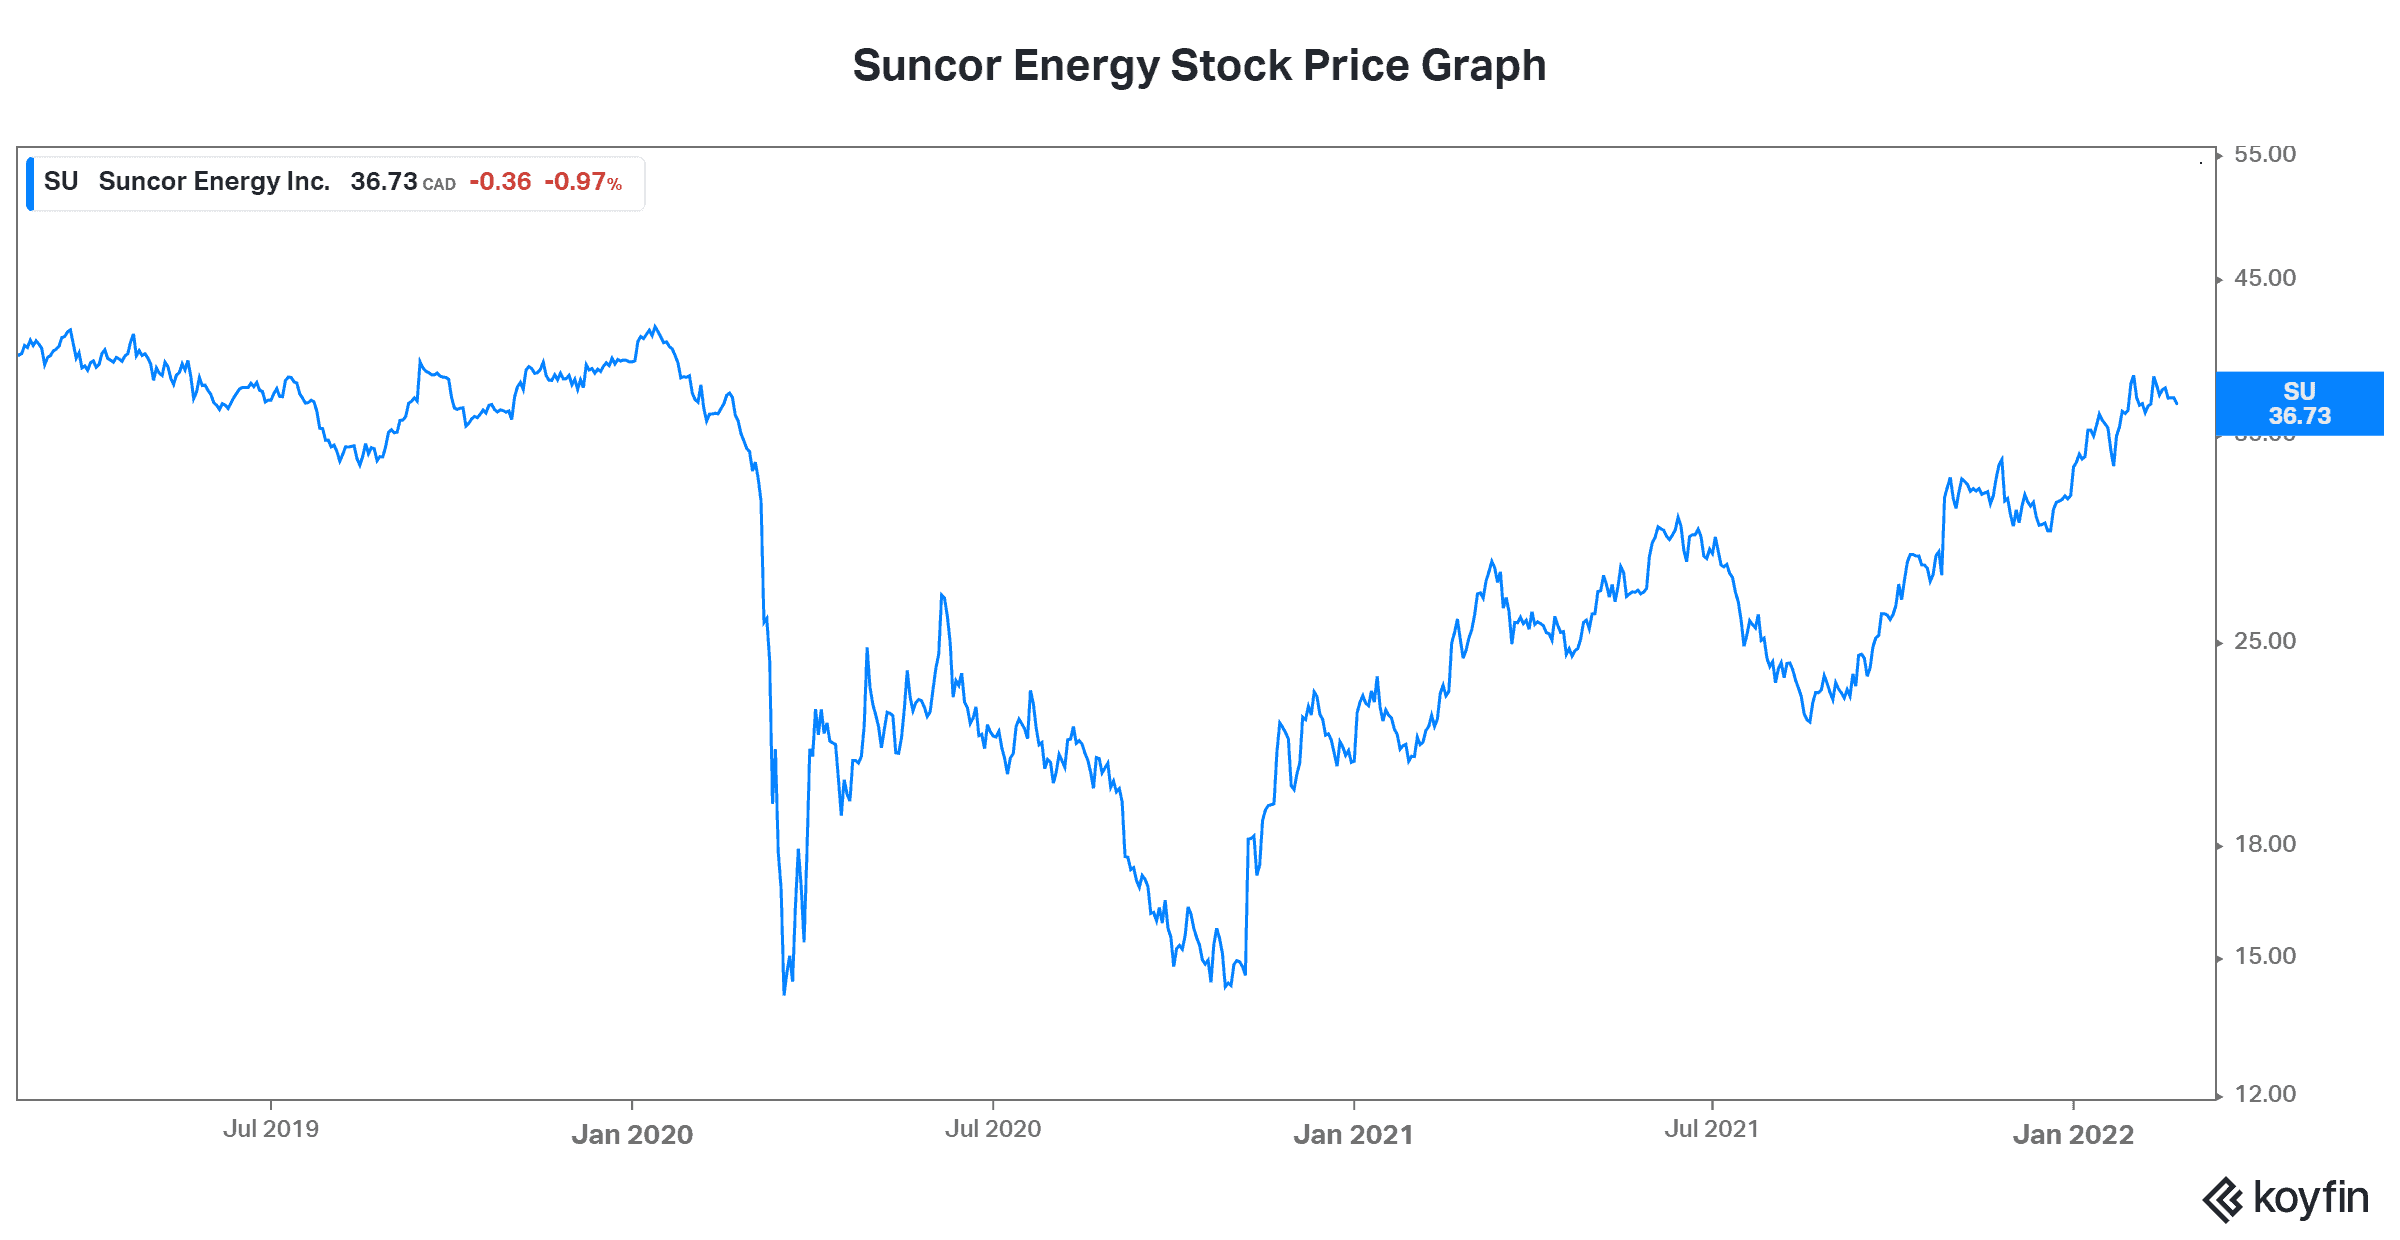 Suncor Energy stock crude oil price